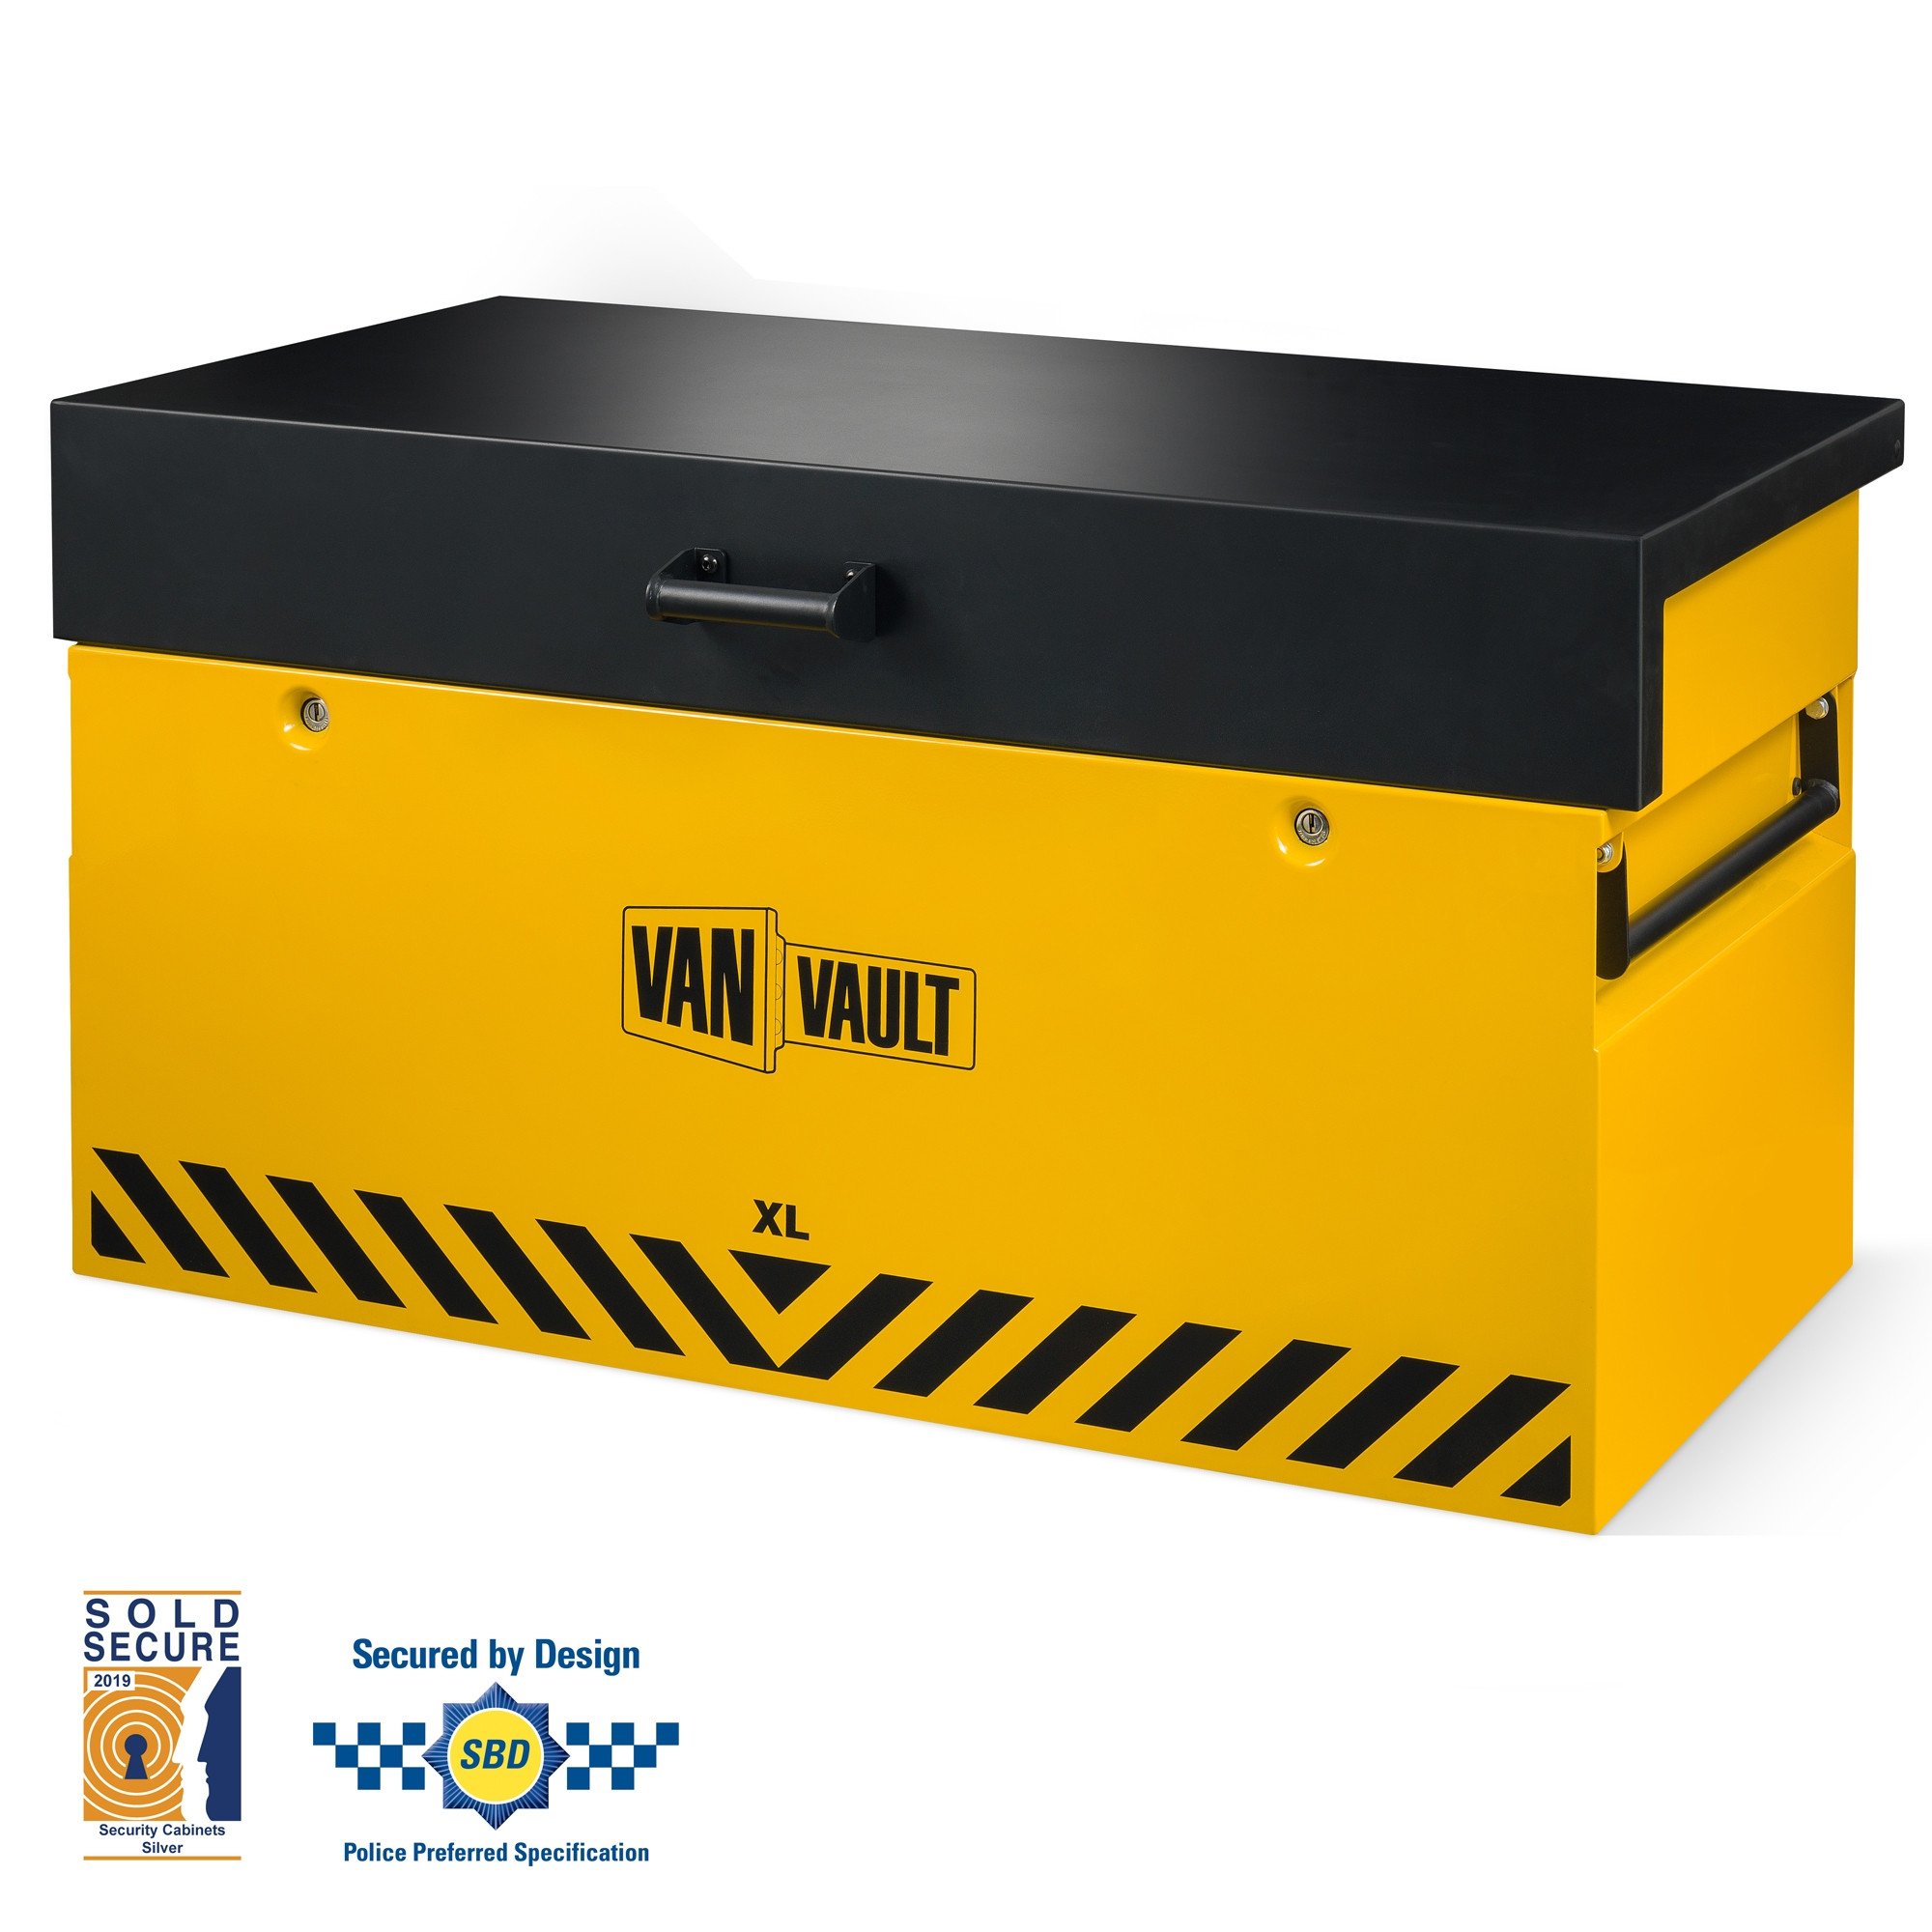 Van Vault S10840 XL站点安全框